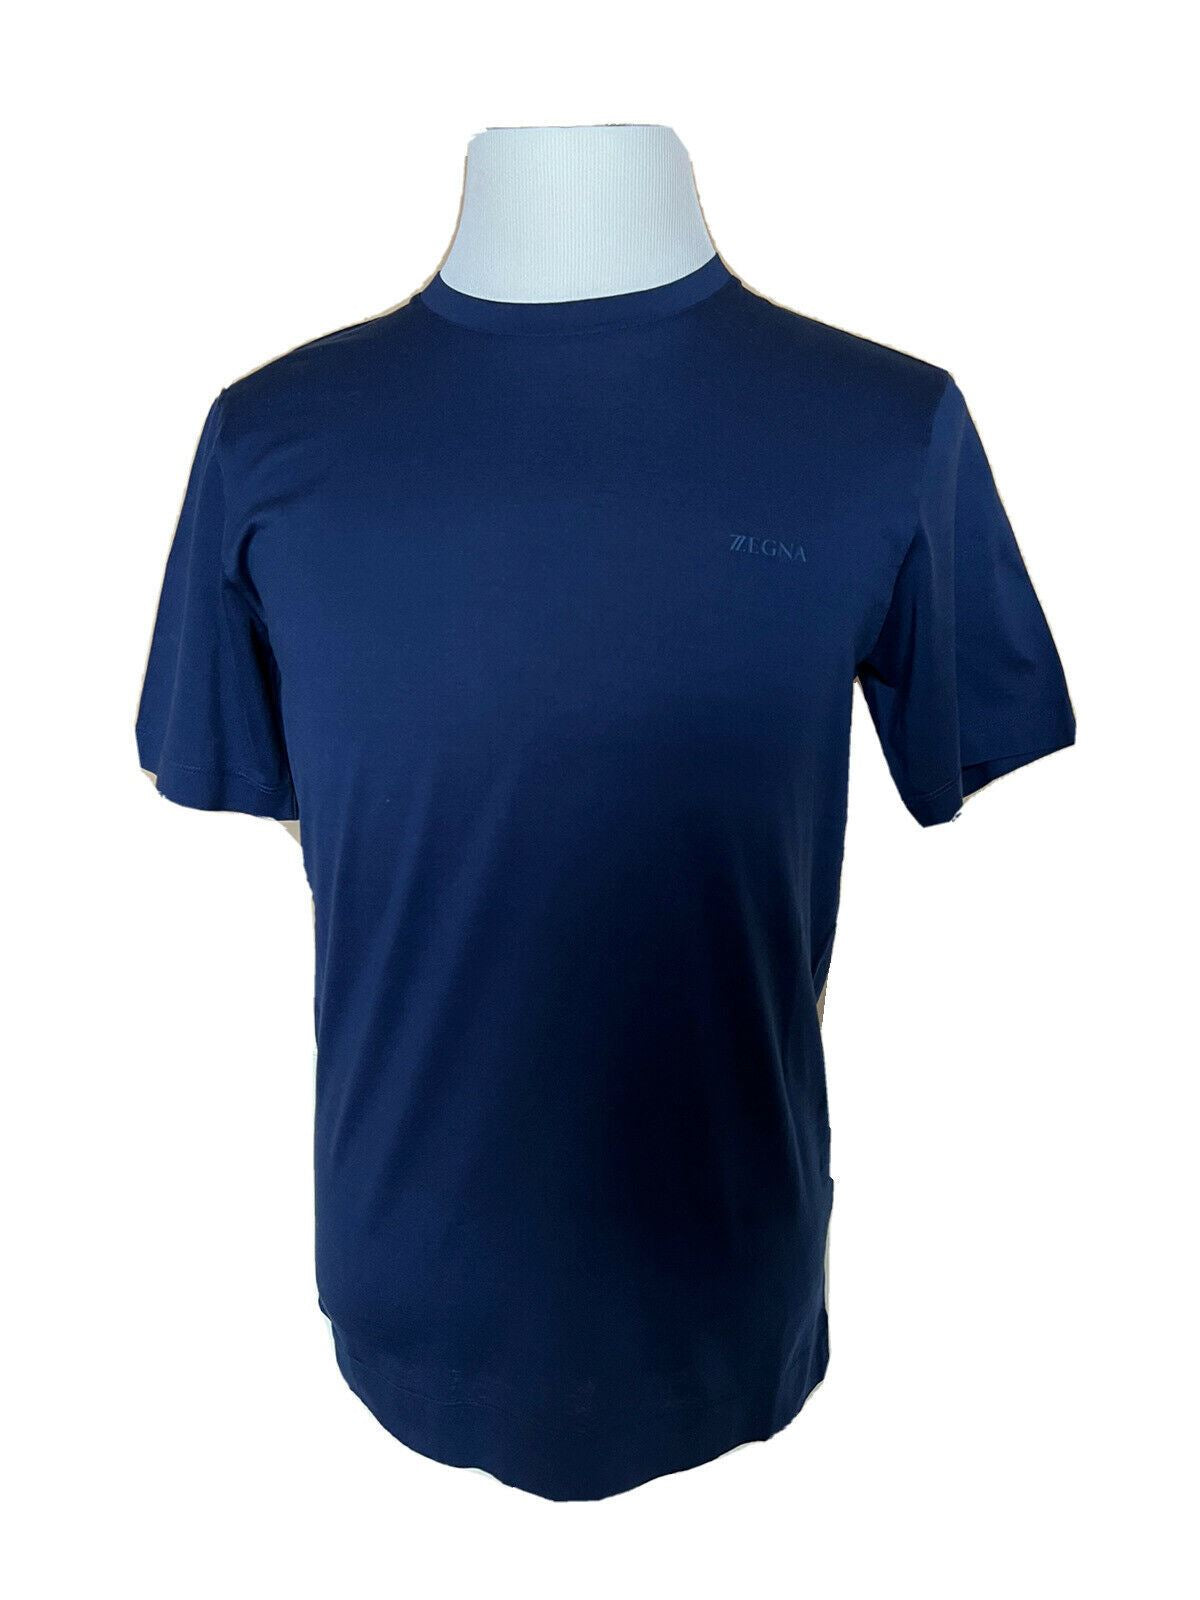 NWT $325 ZZEGNA Crewneck Blue T-Shirt Small ZZF630